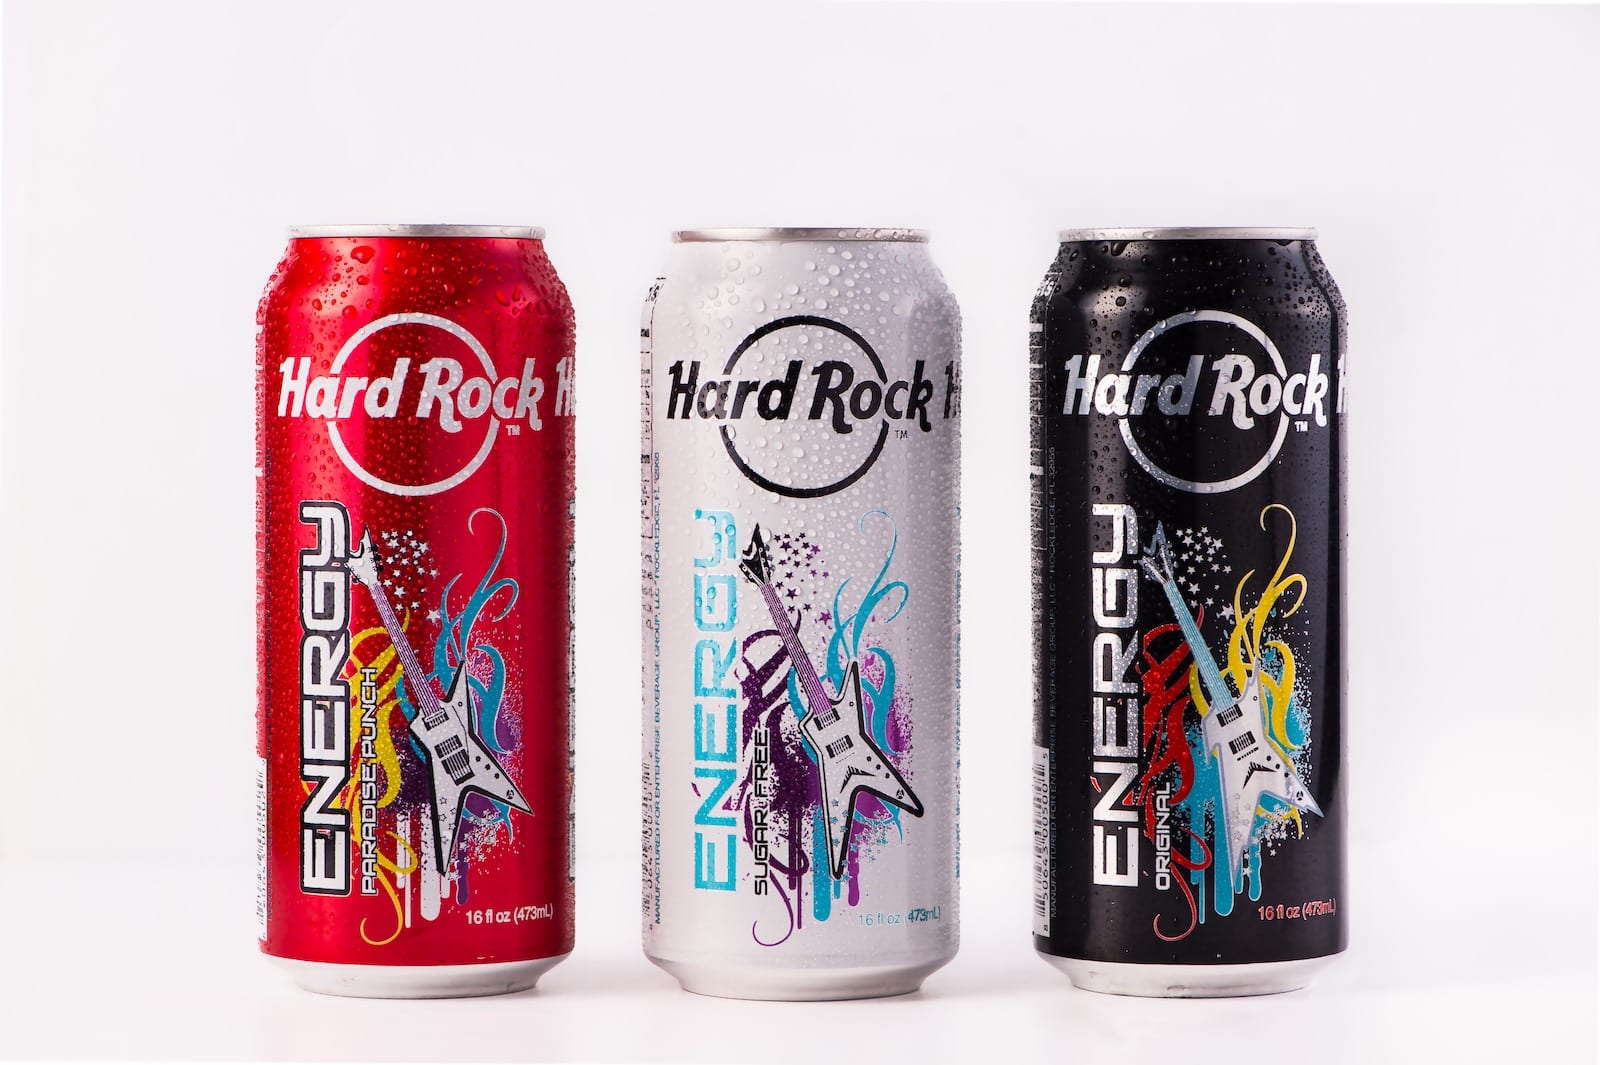 Hard Rock Energy, Marketing by C&I Studios